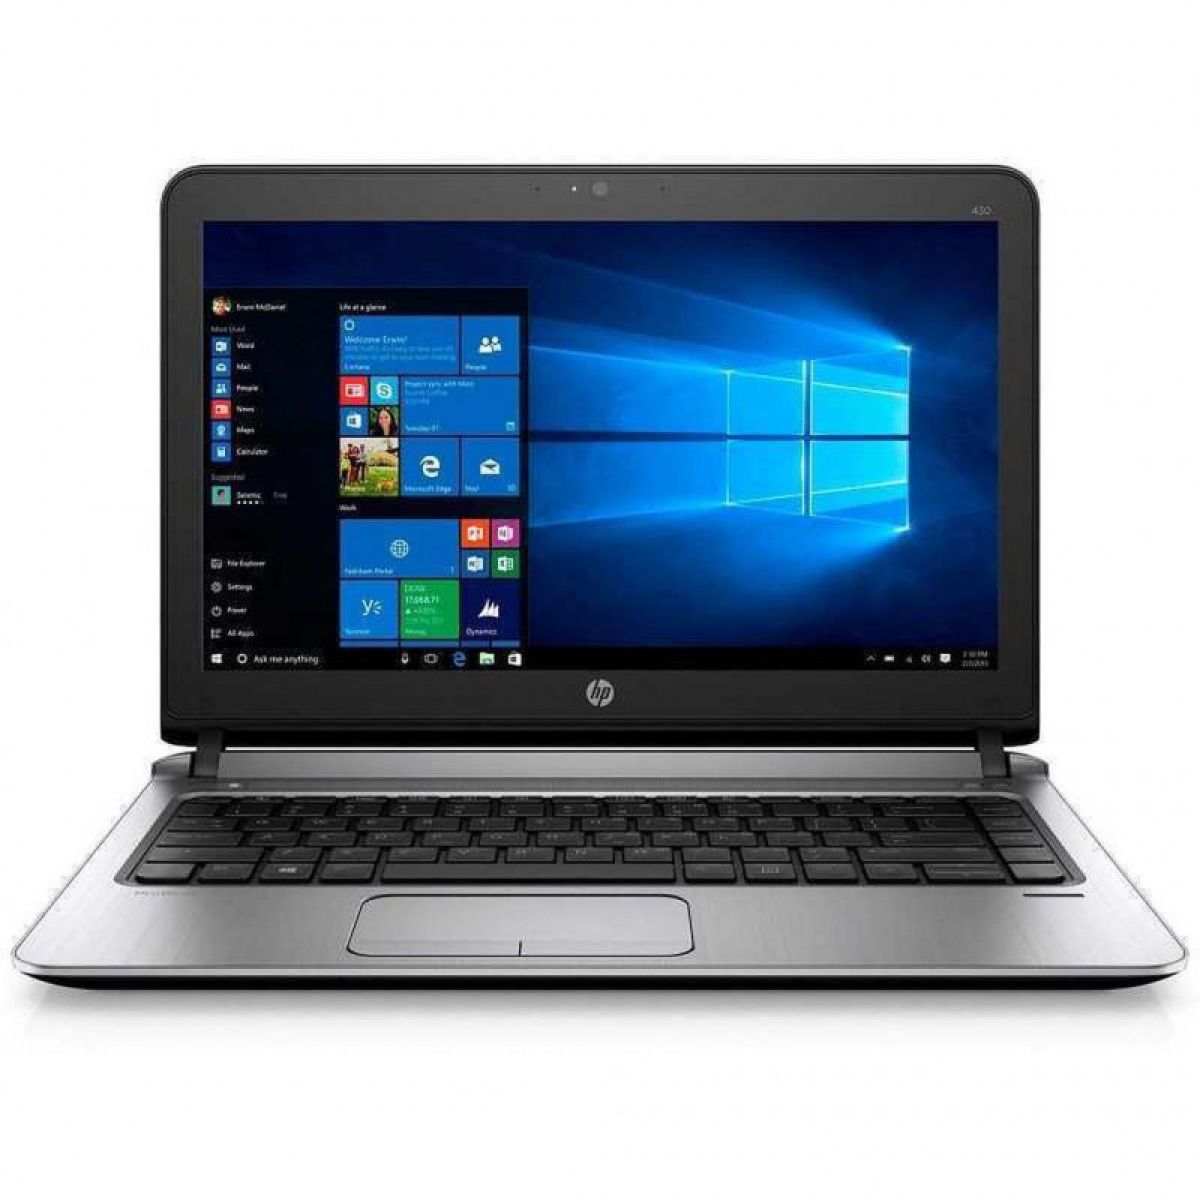 HP ProBook 430 G3 core i5 2,3 Ghz 4 Go HDD 500 Go